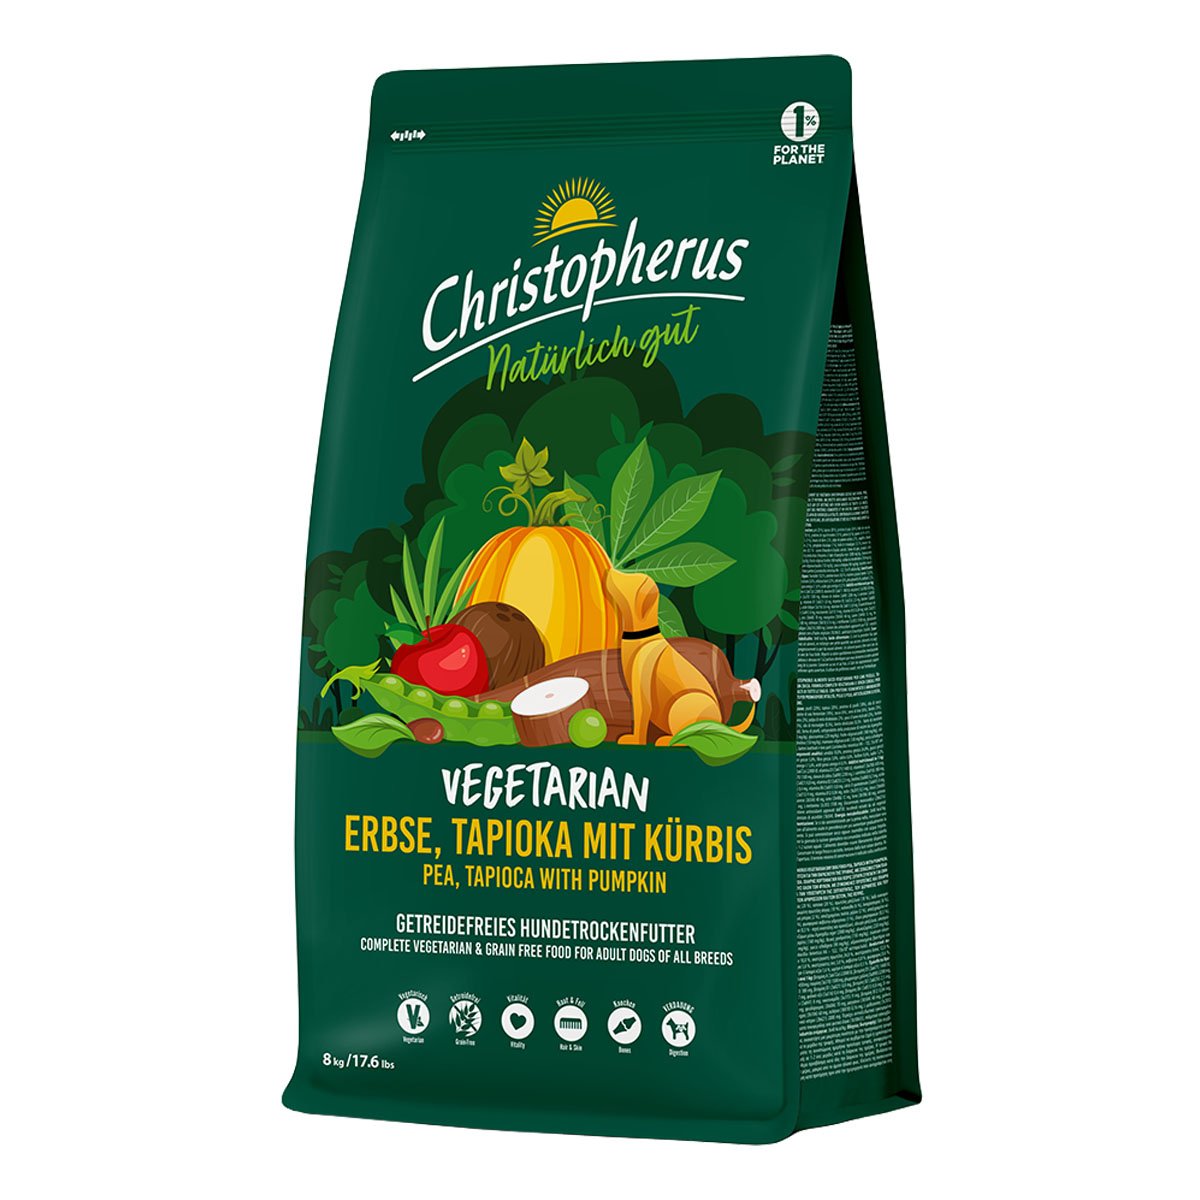 Christopherus Vegetarian - Erbse